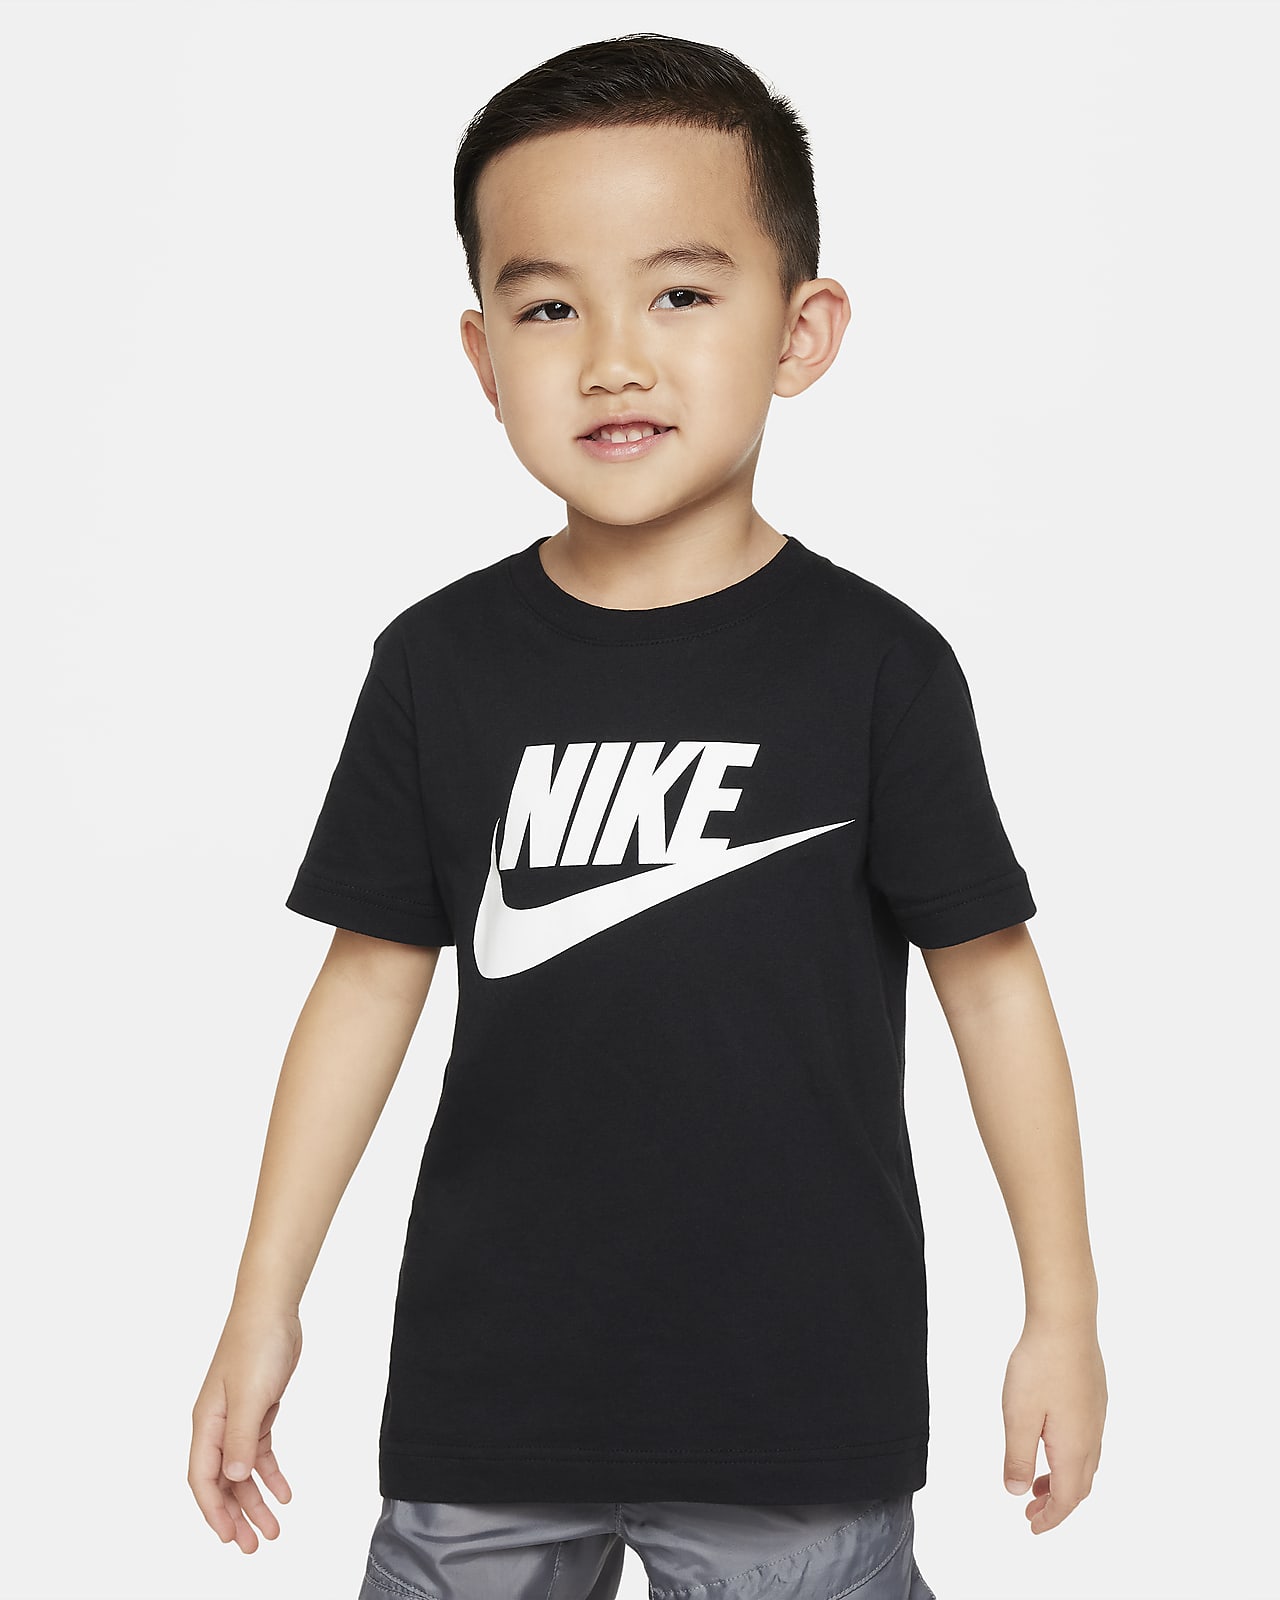 Nike Futura Tee Camiseta - Niño/a pequeño/a